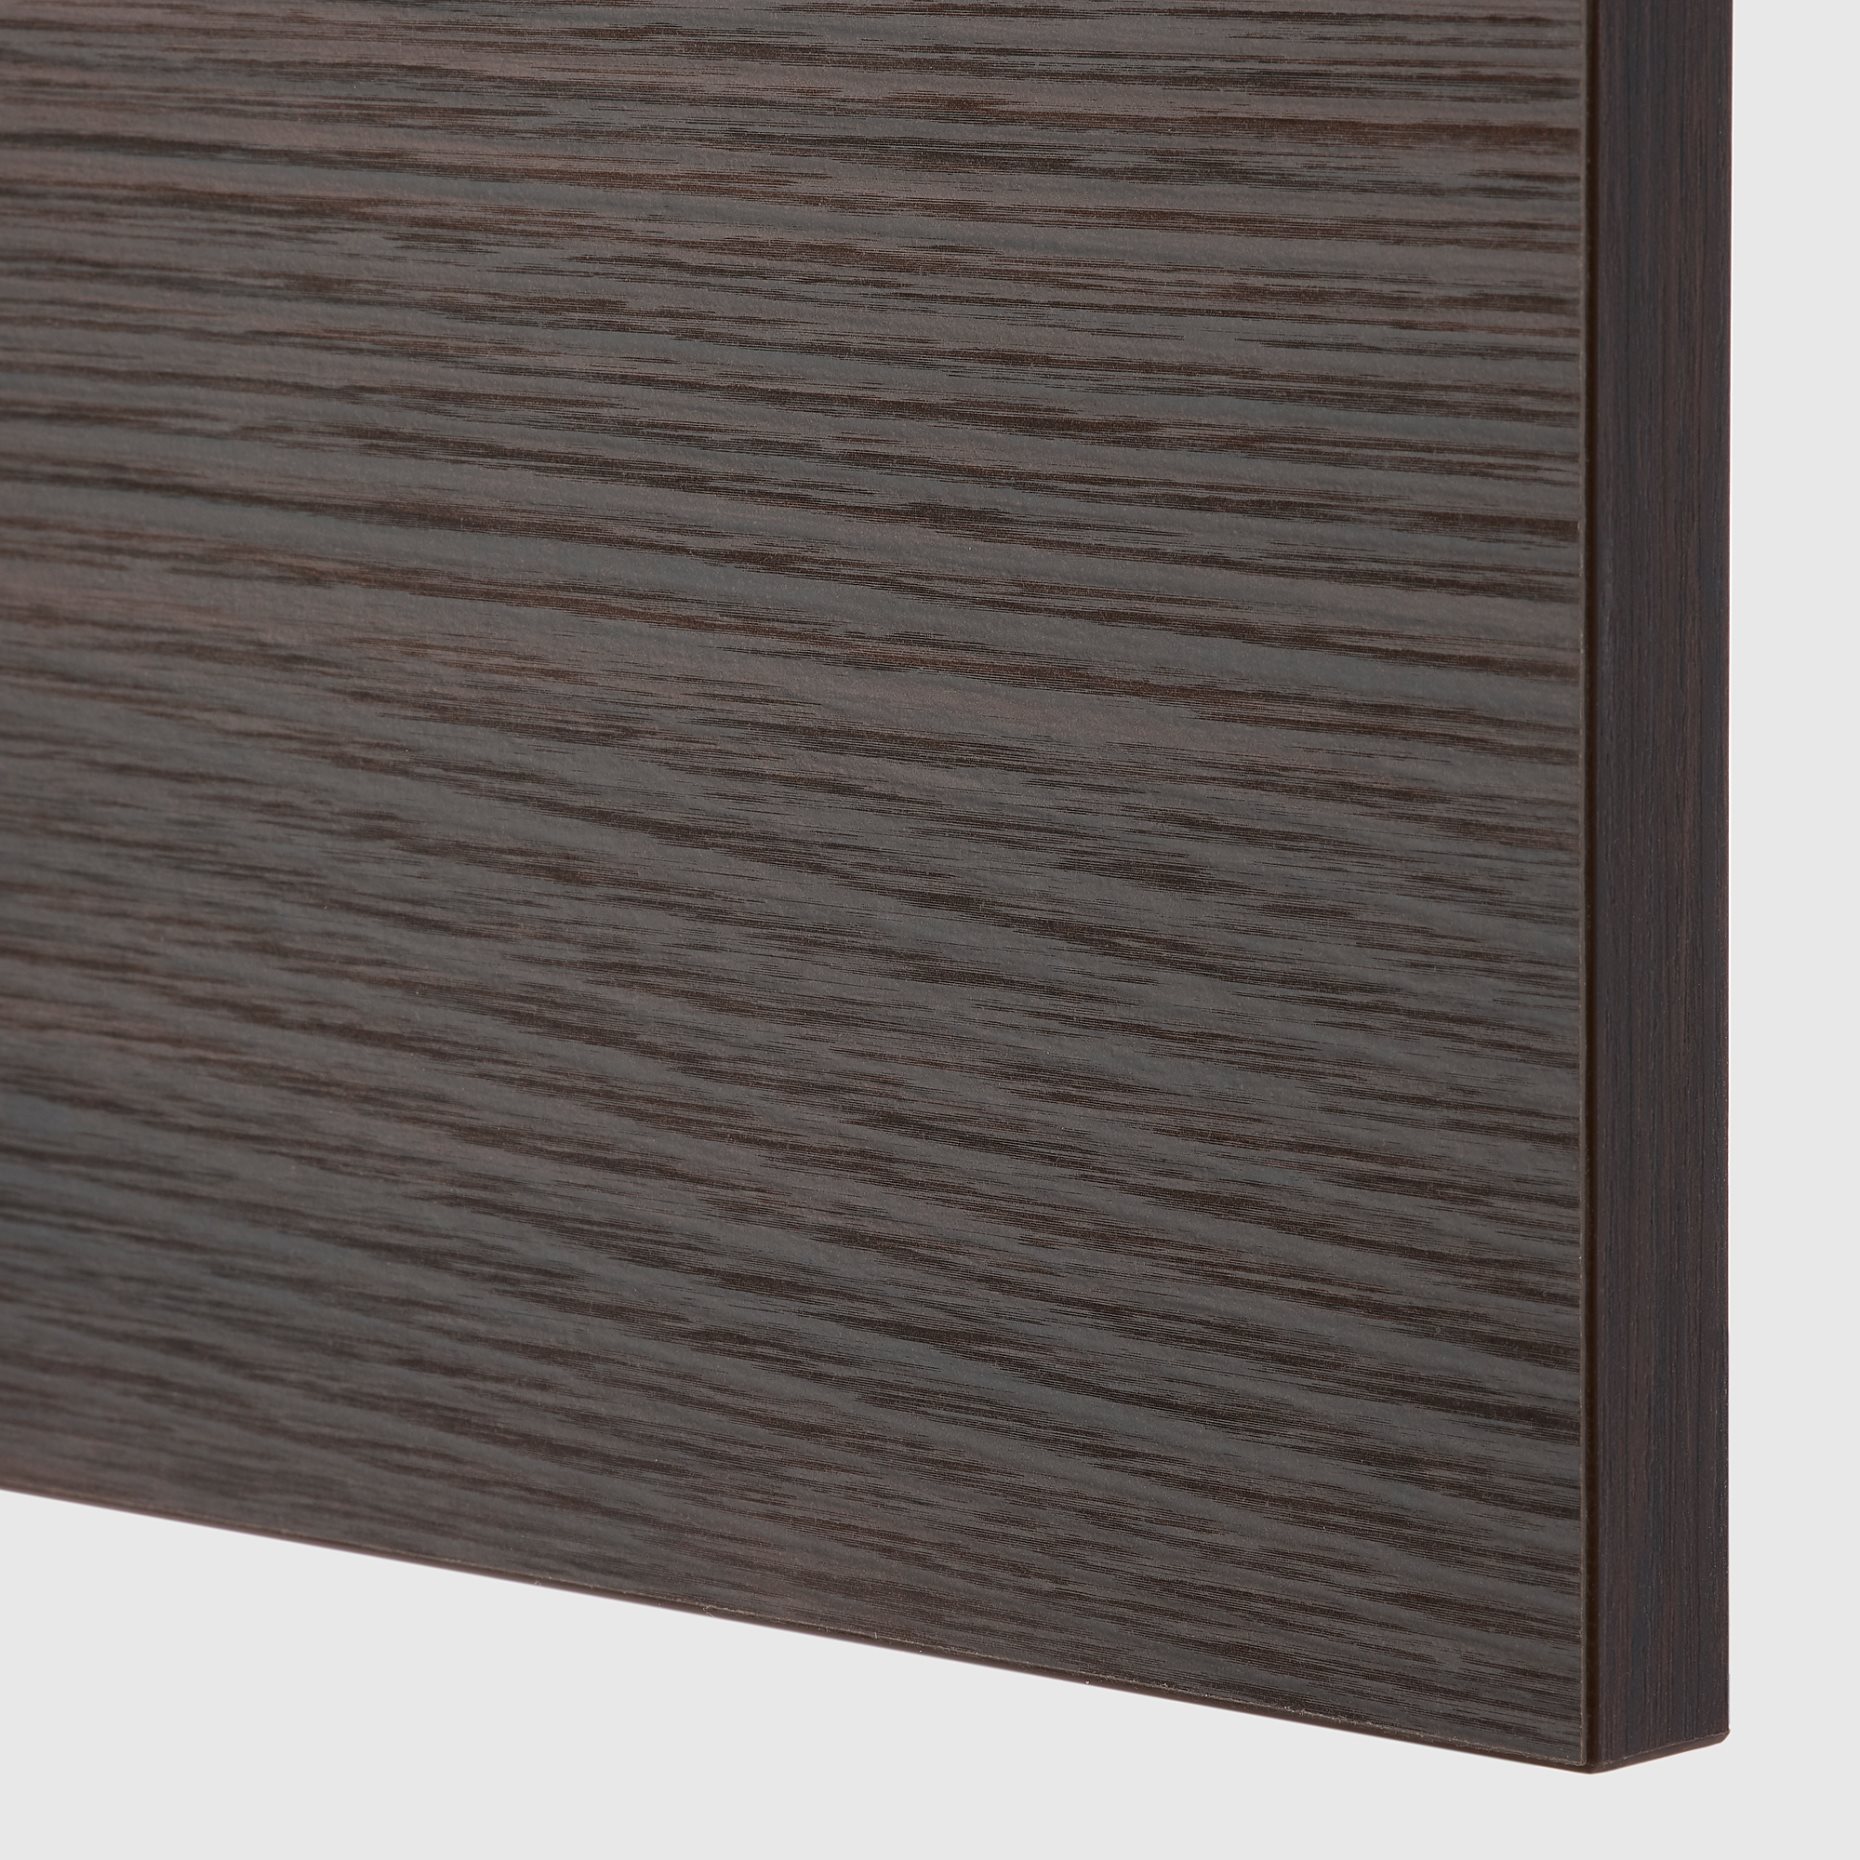 ASKERSUND, drawer front, 40x40 cm, 104.252.58